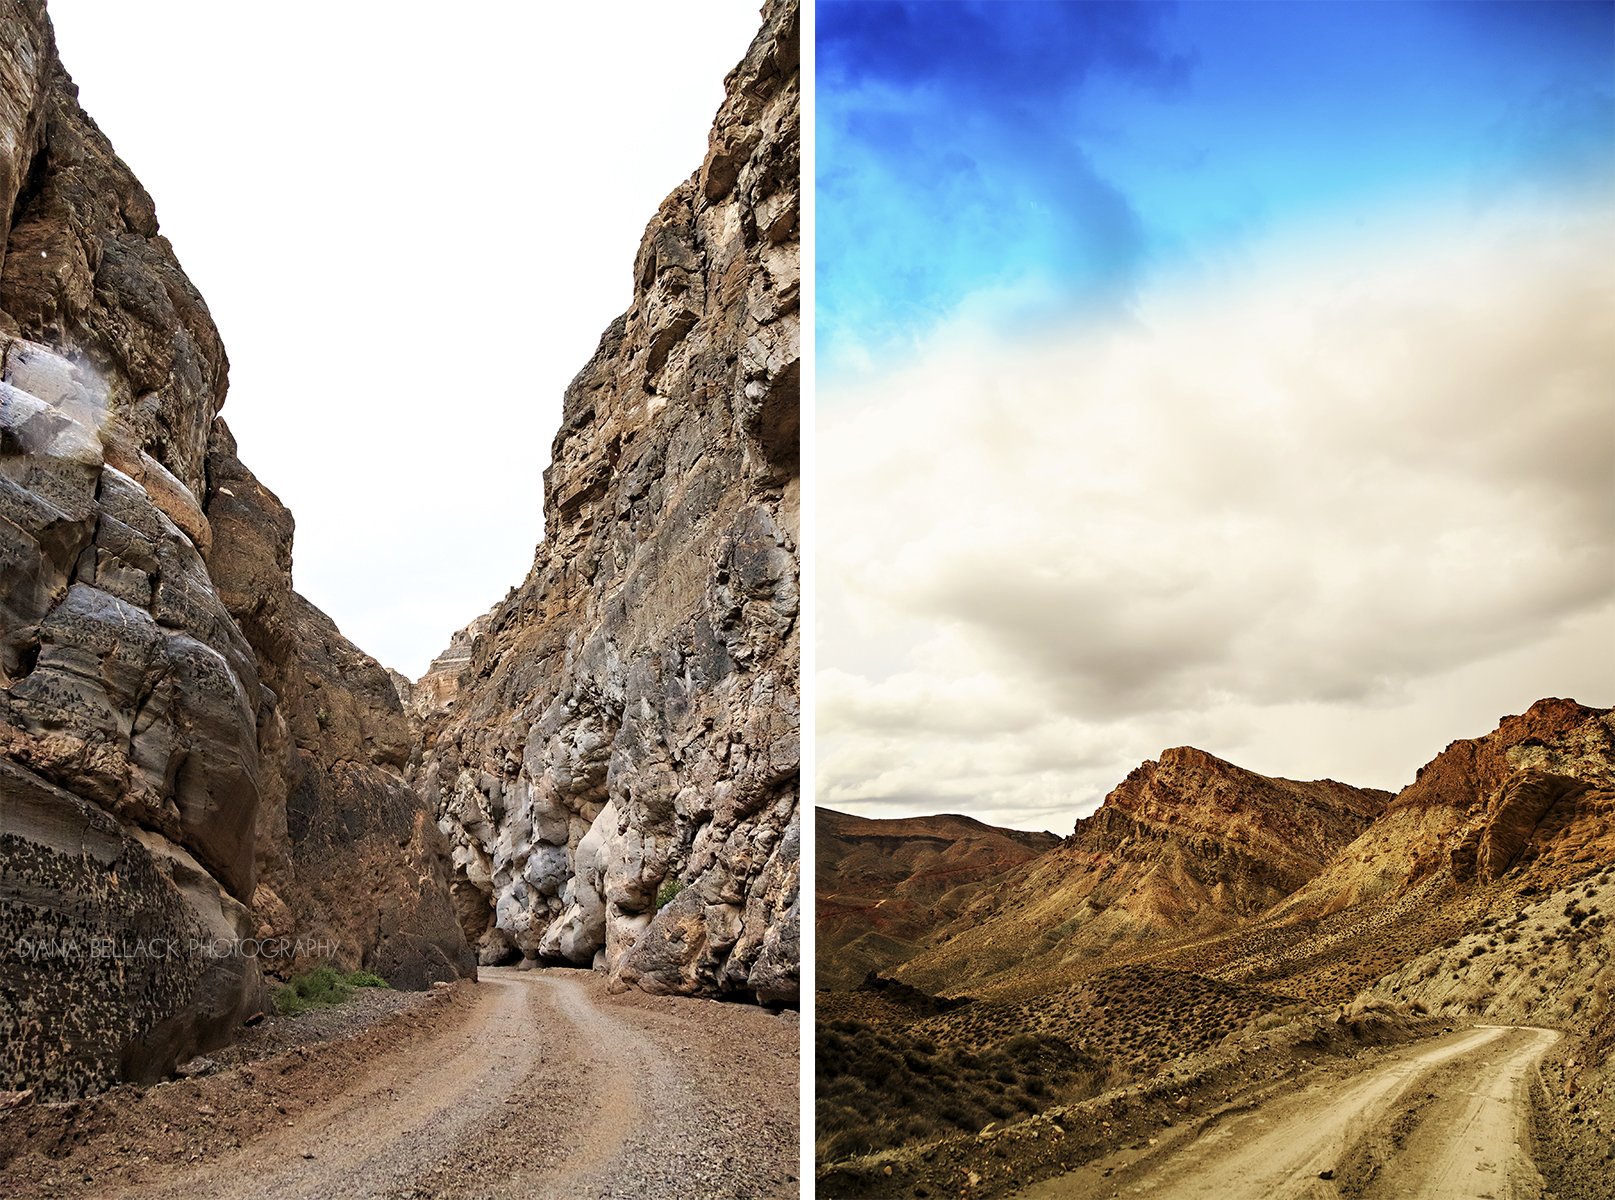 Landscape Photography, Nevada Landscape, California Landscape, Death Valley, Badwater Basin, Titus Canyon, Travel, Diana Bellack Photography, Travel Blog